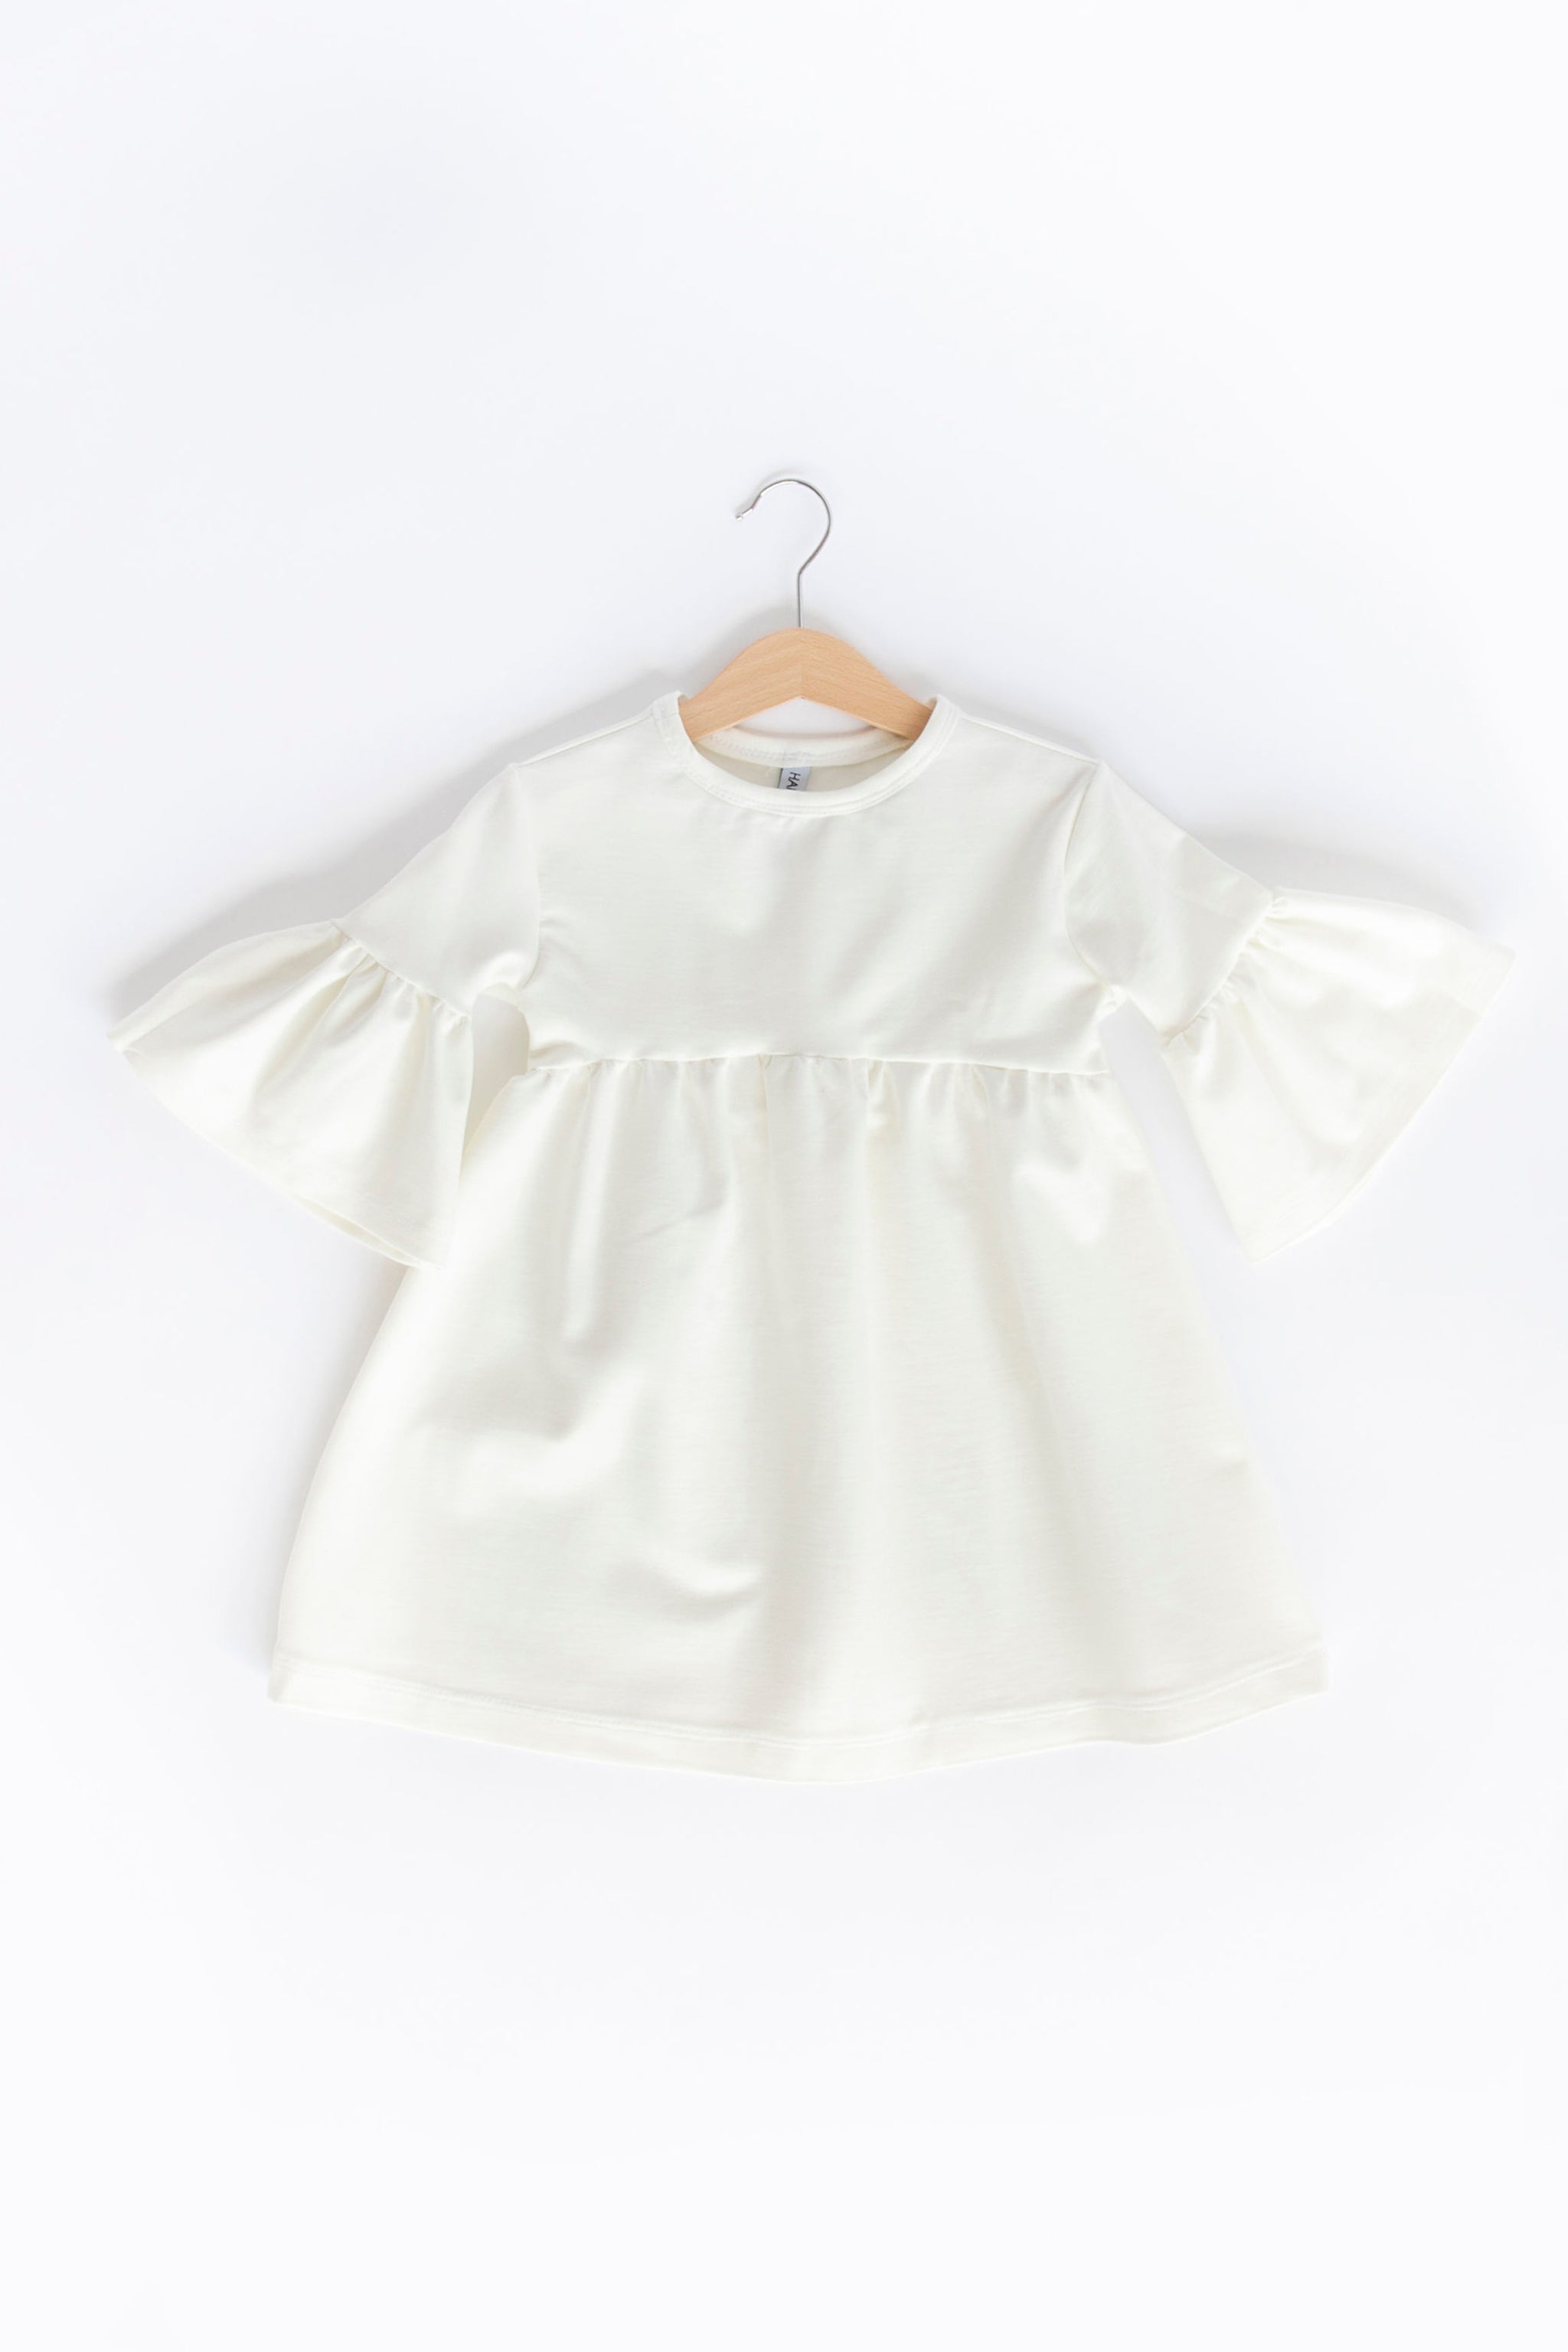 MINI - Cream - Ruffle Bell Dress